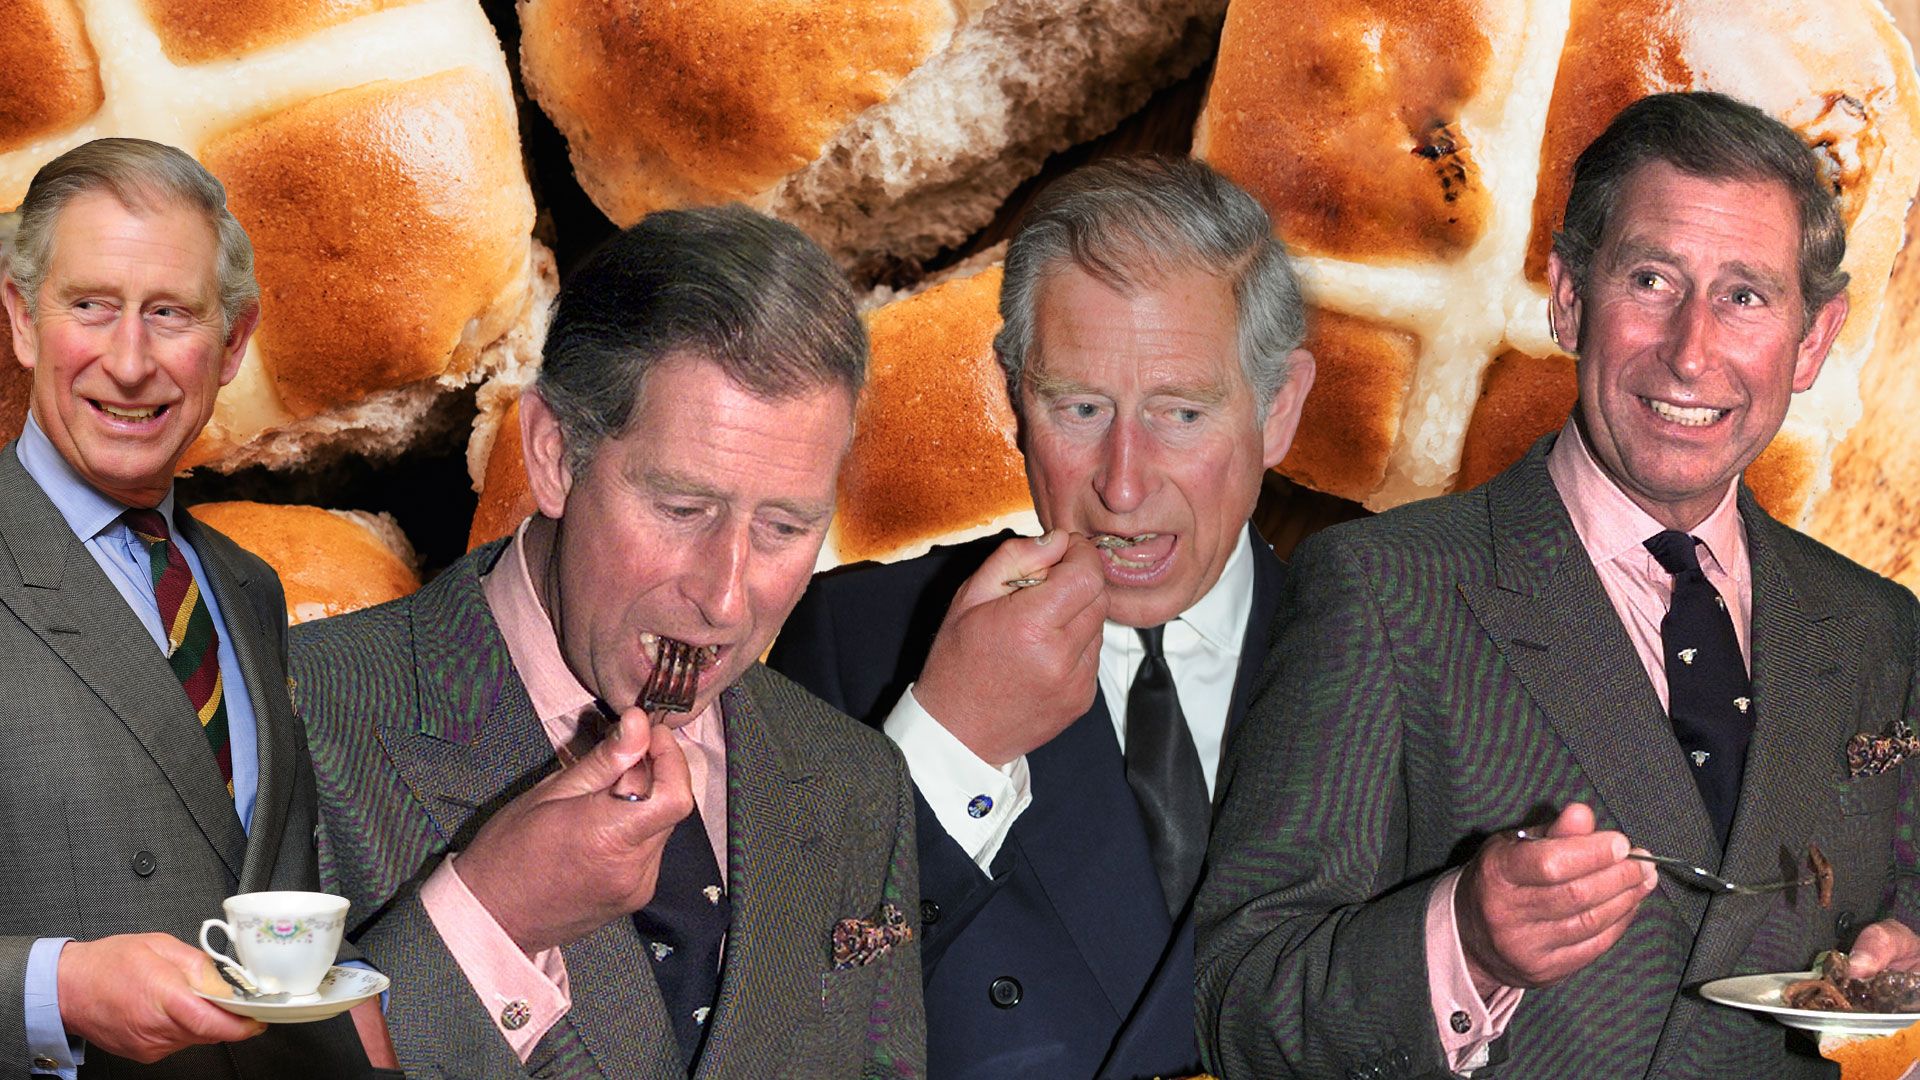 The King eating hot cross buns